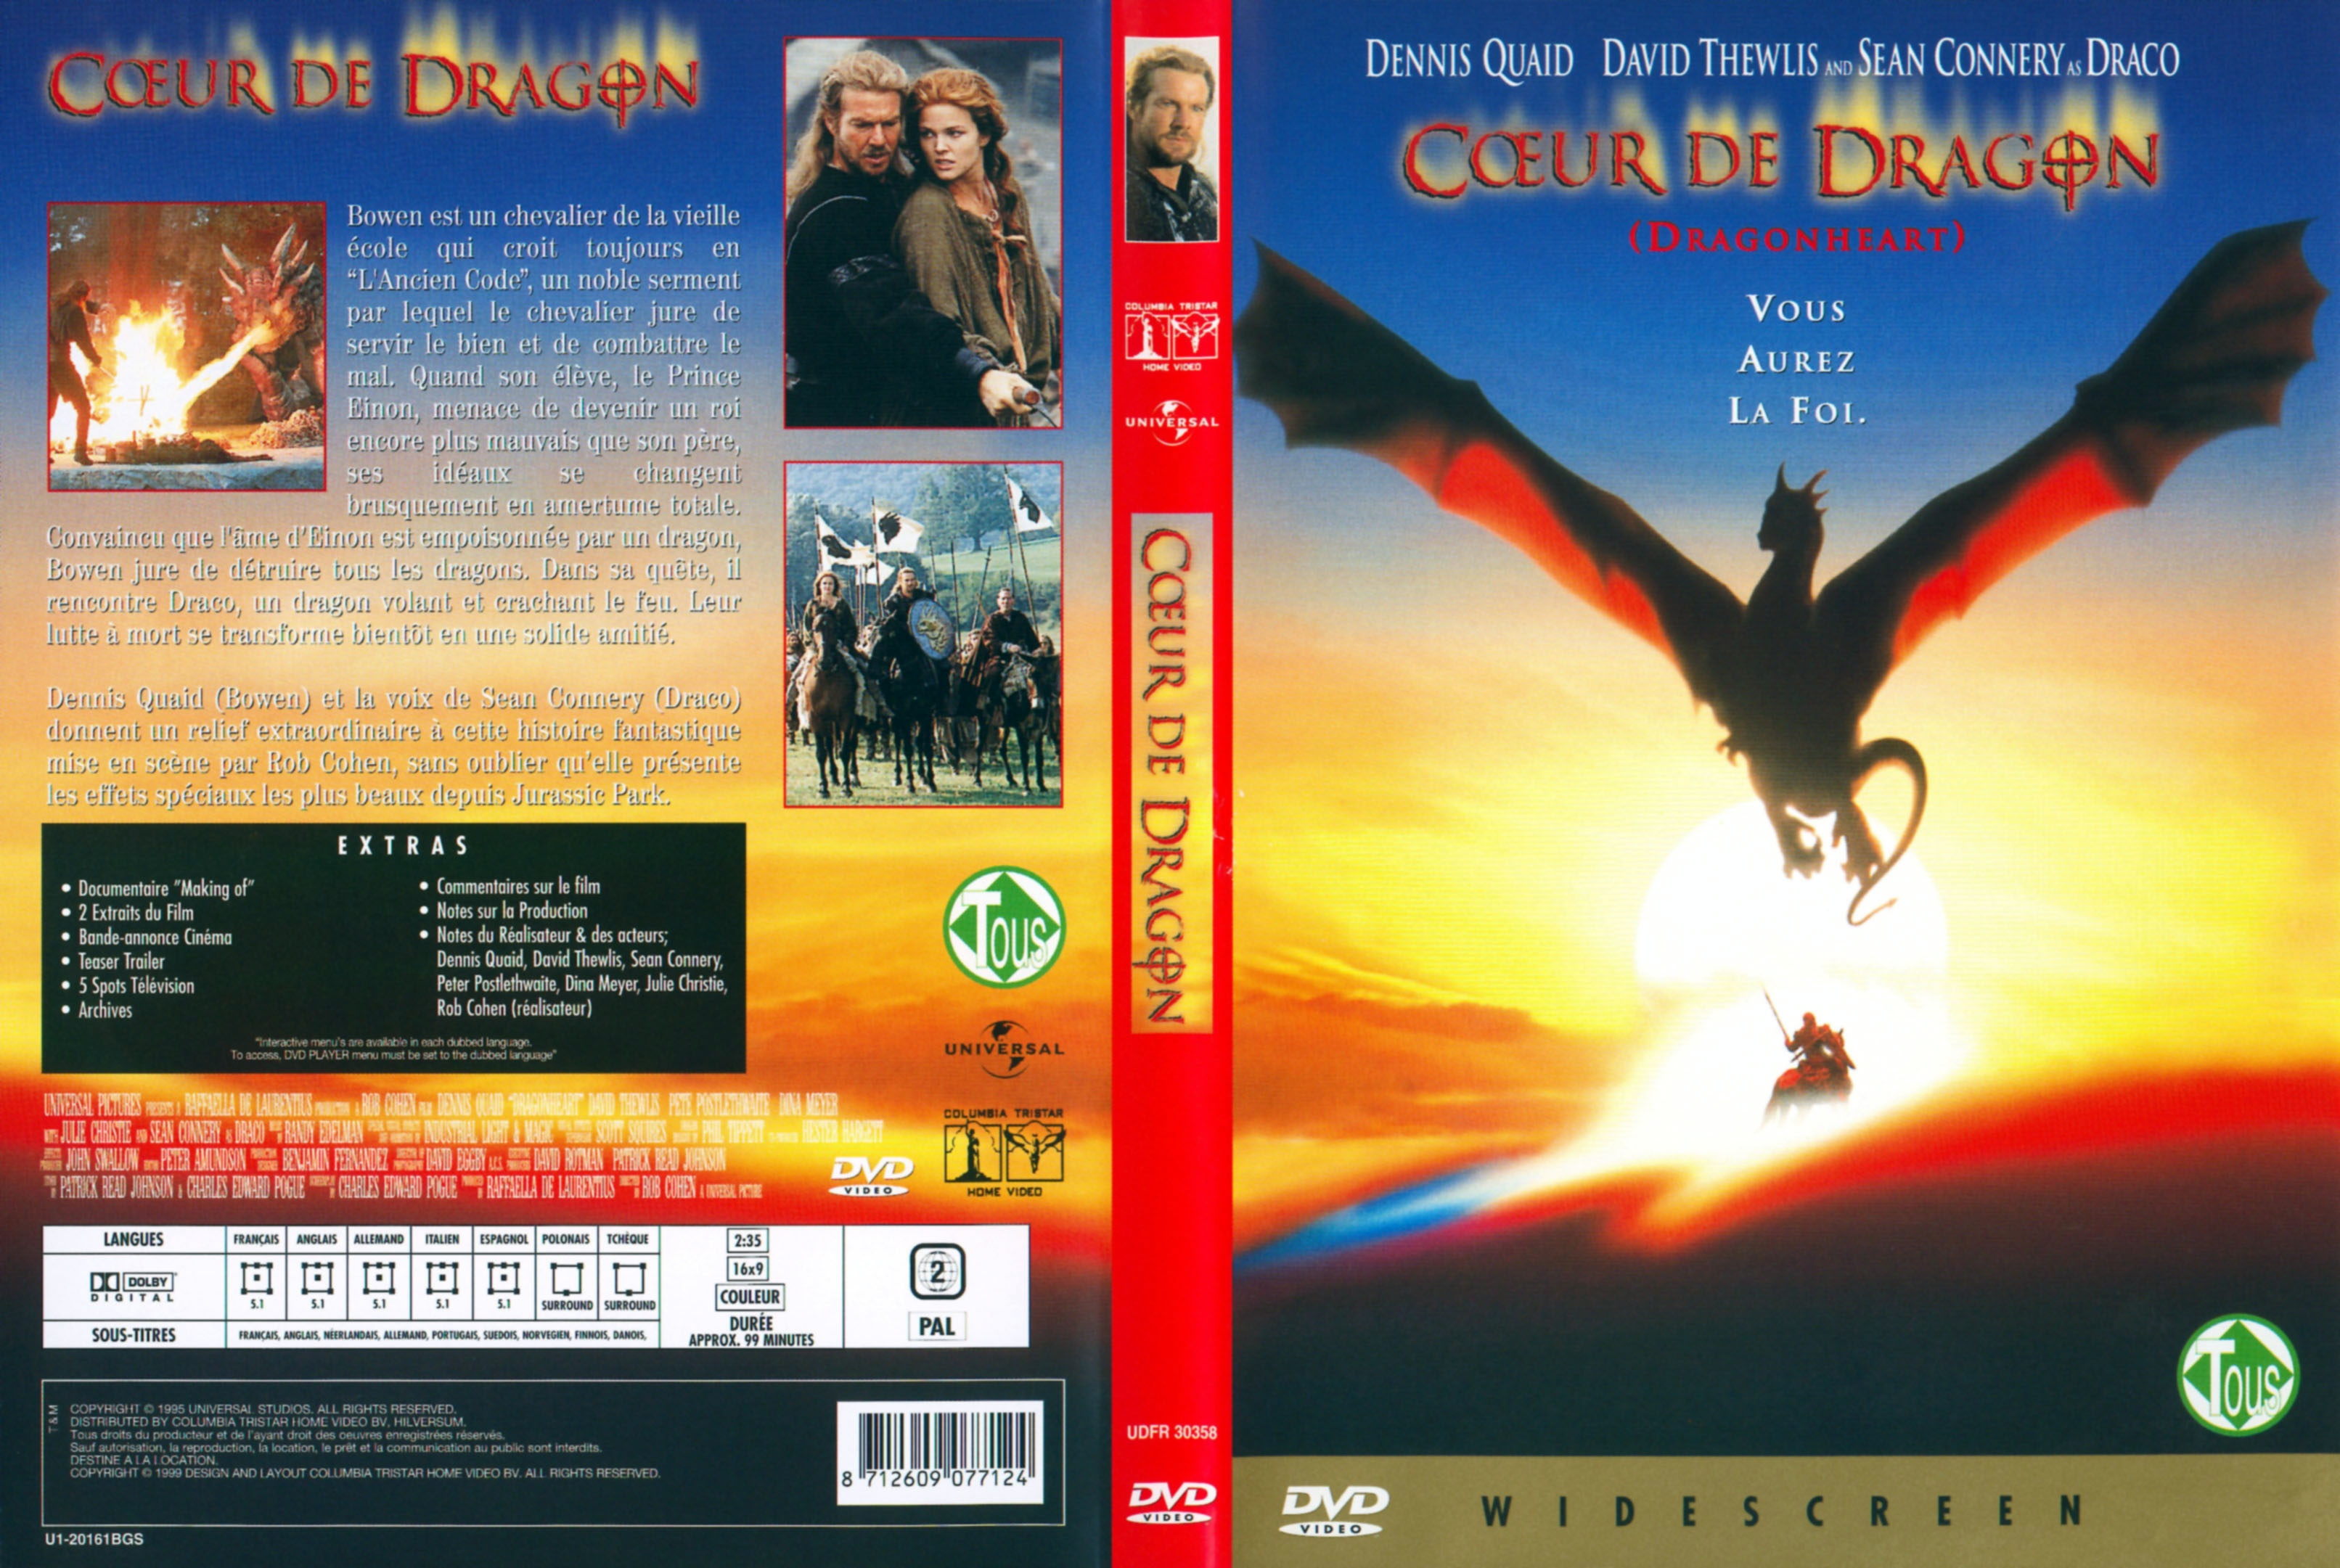 Jaquette DVD Coeur de dragon v3